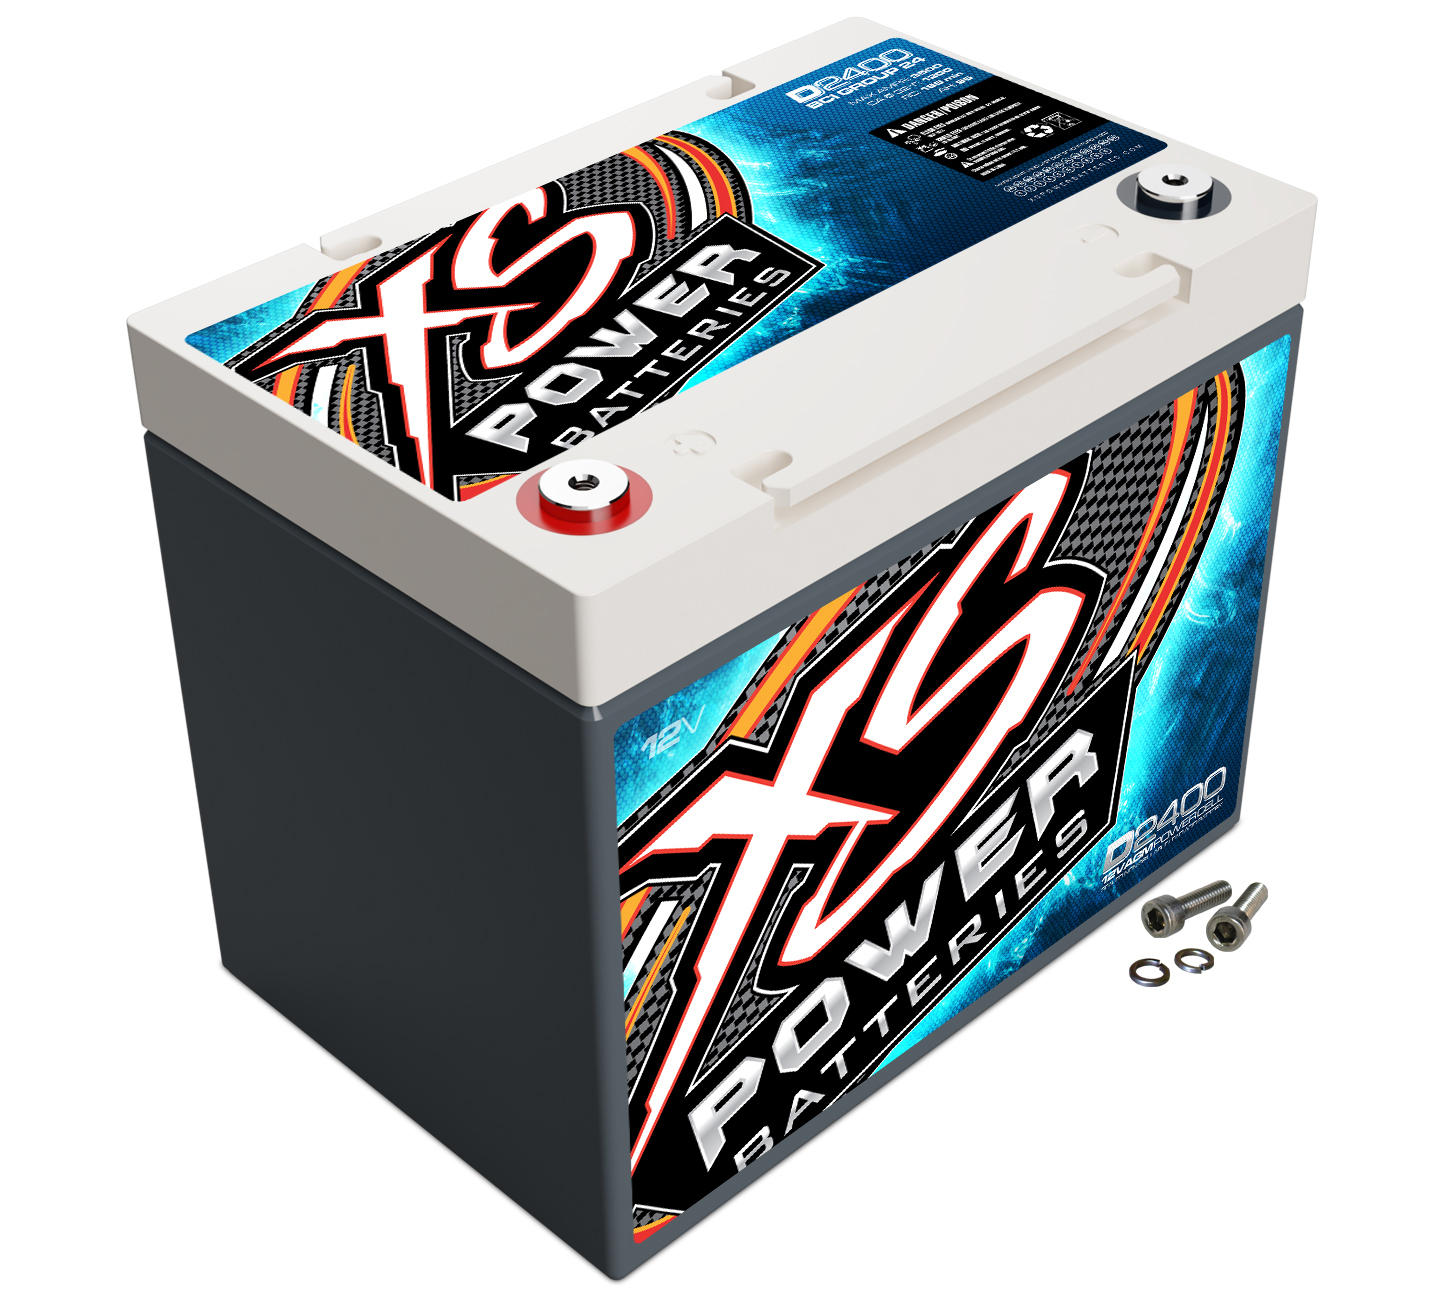 XS Power AGM Battery 12 Volt 8